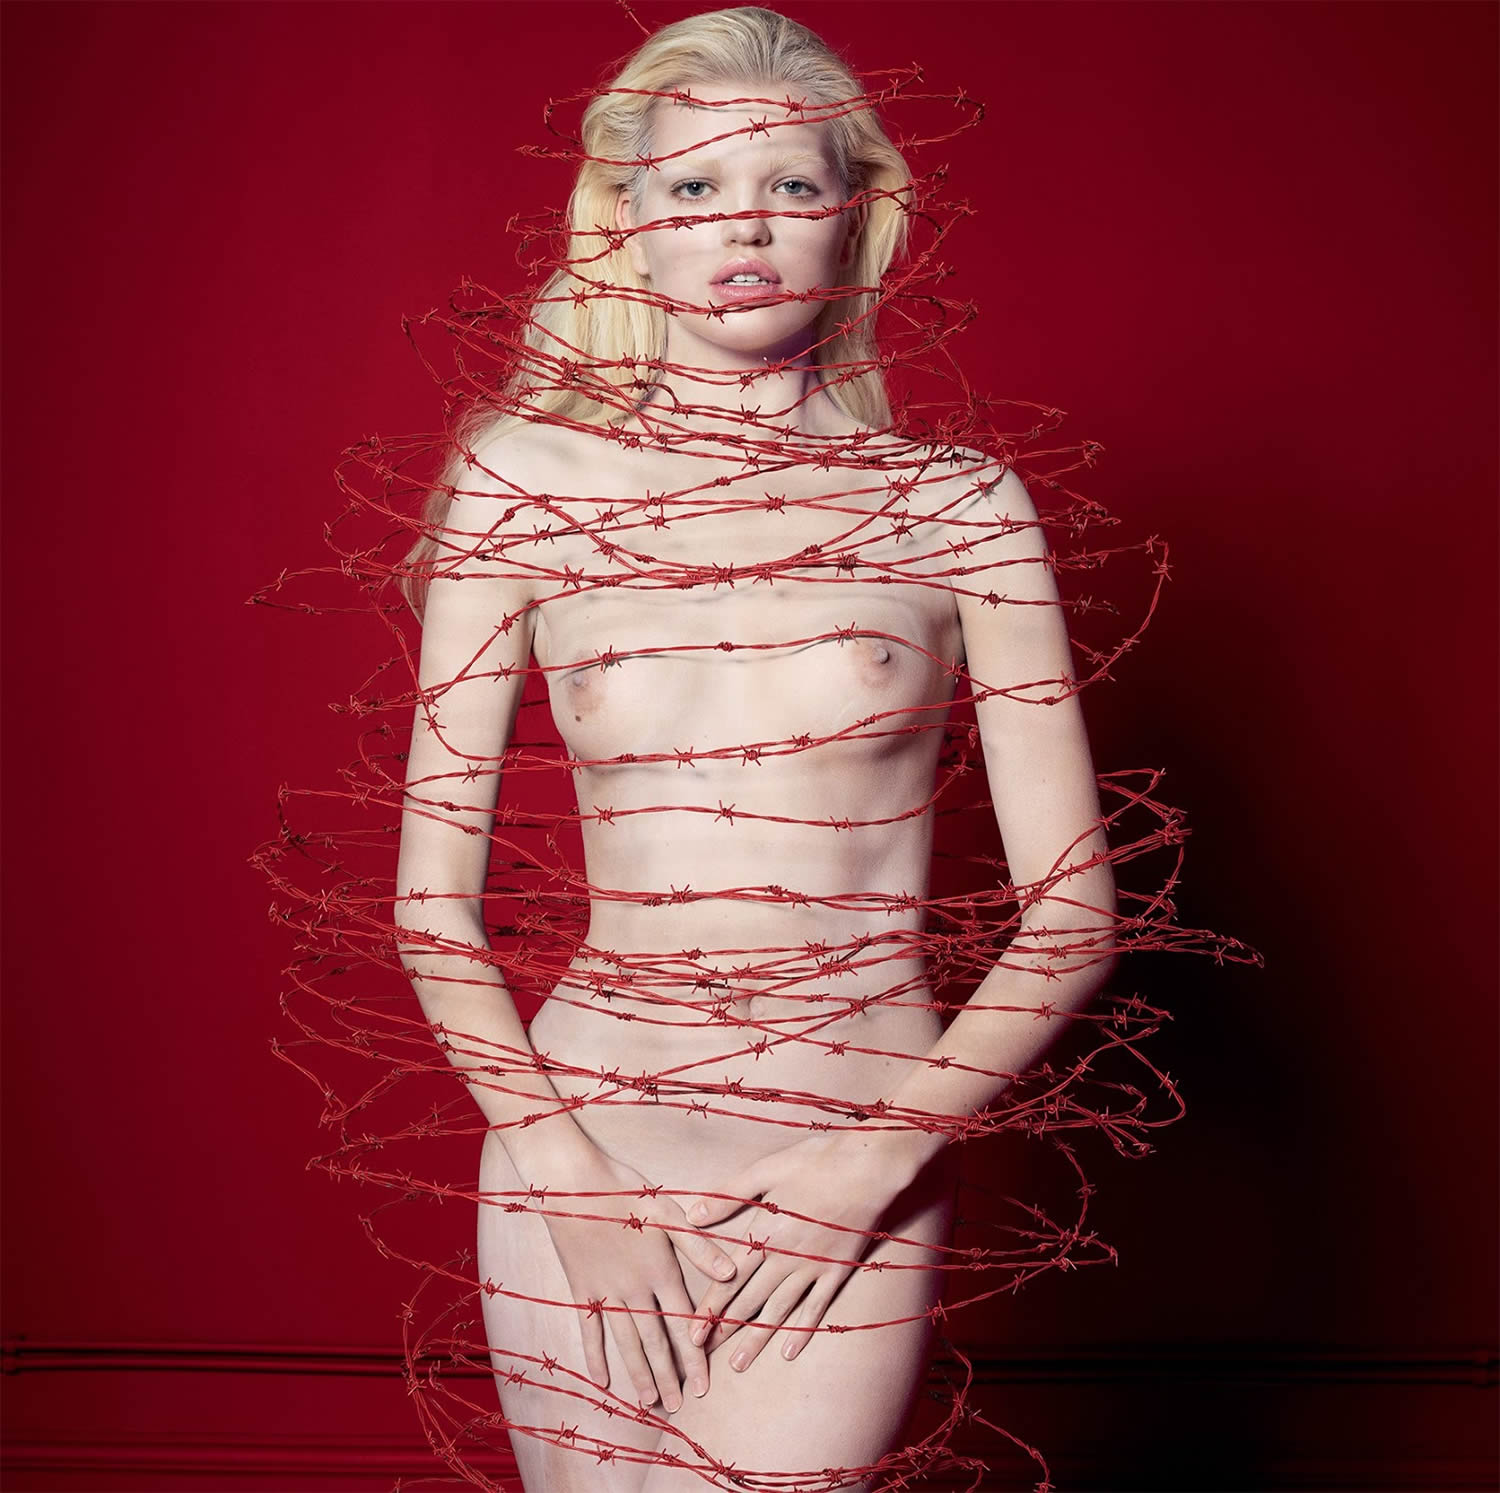 blonde girl in barb wire, cuneyt akeroglu red room